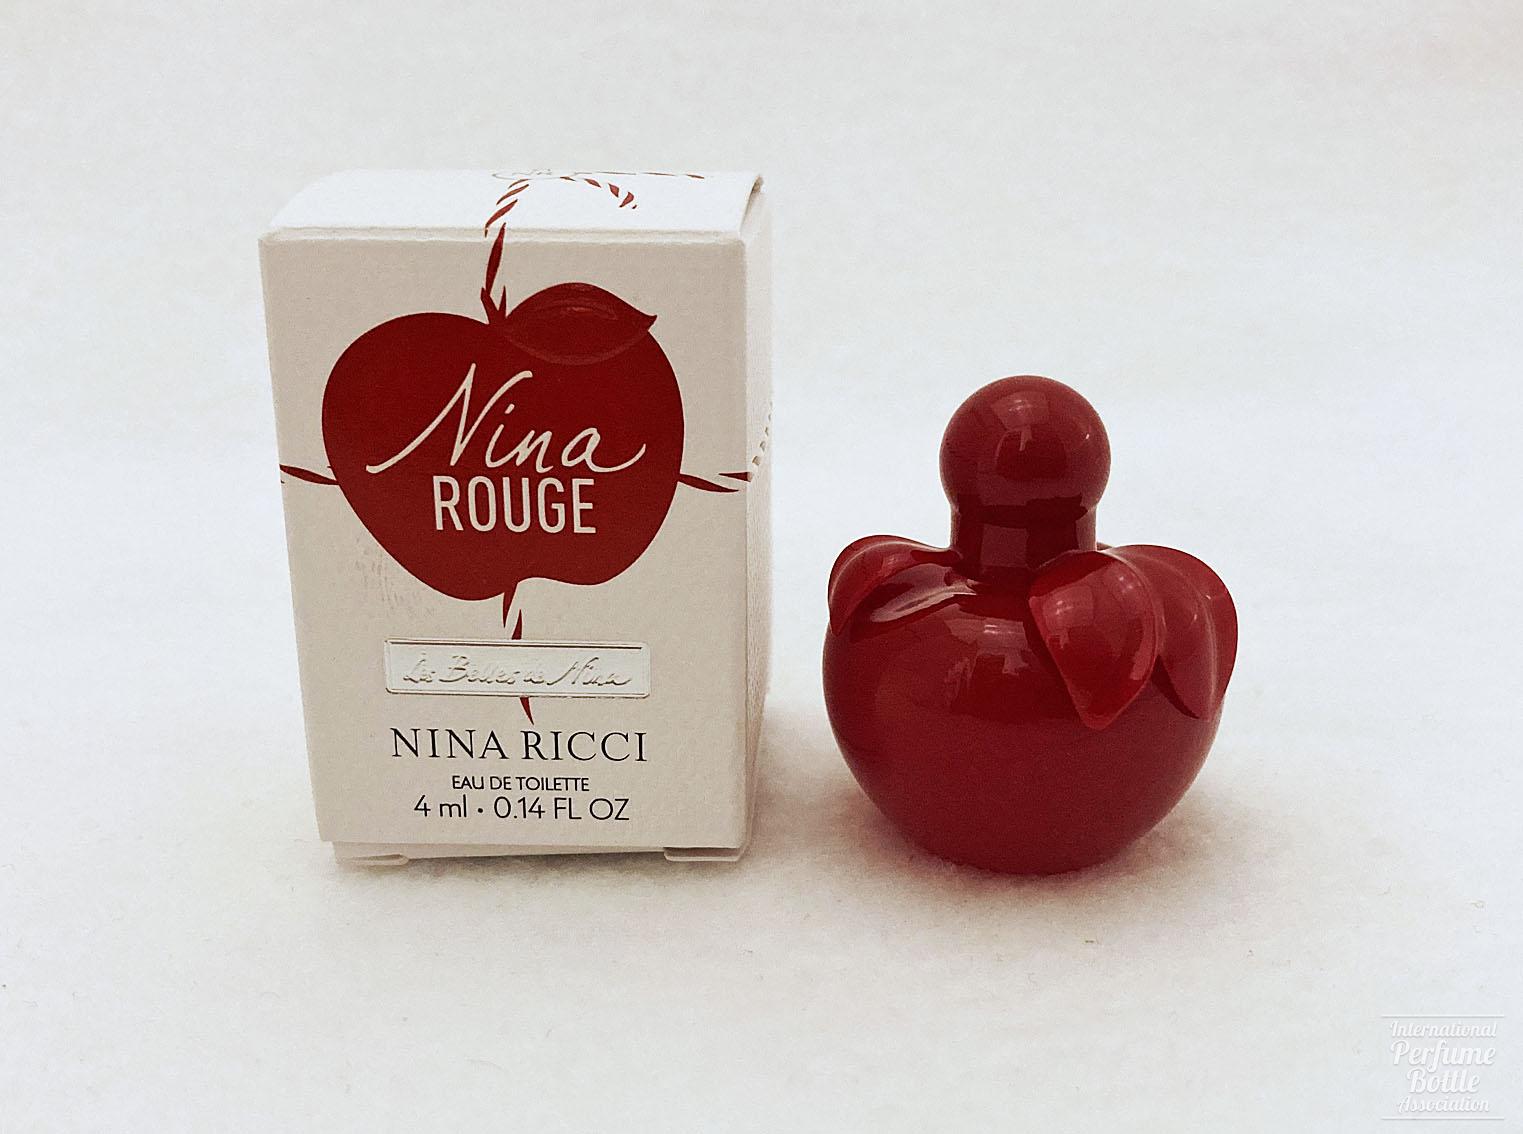 "Nina Rouge" Mini by Nina Ricci